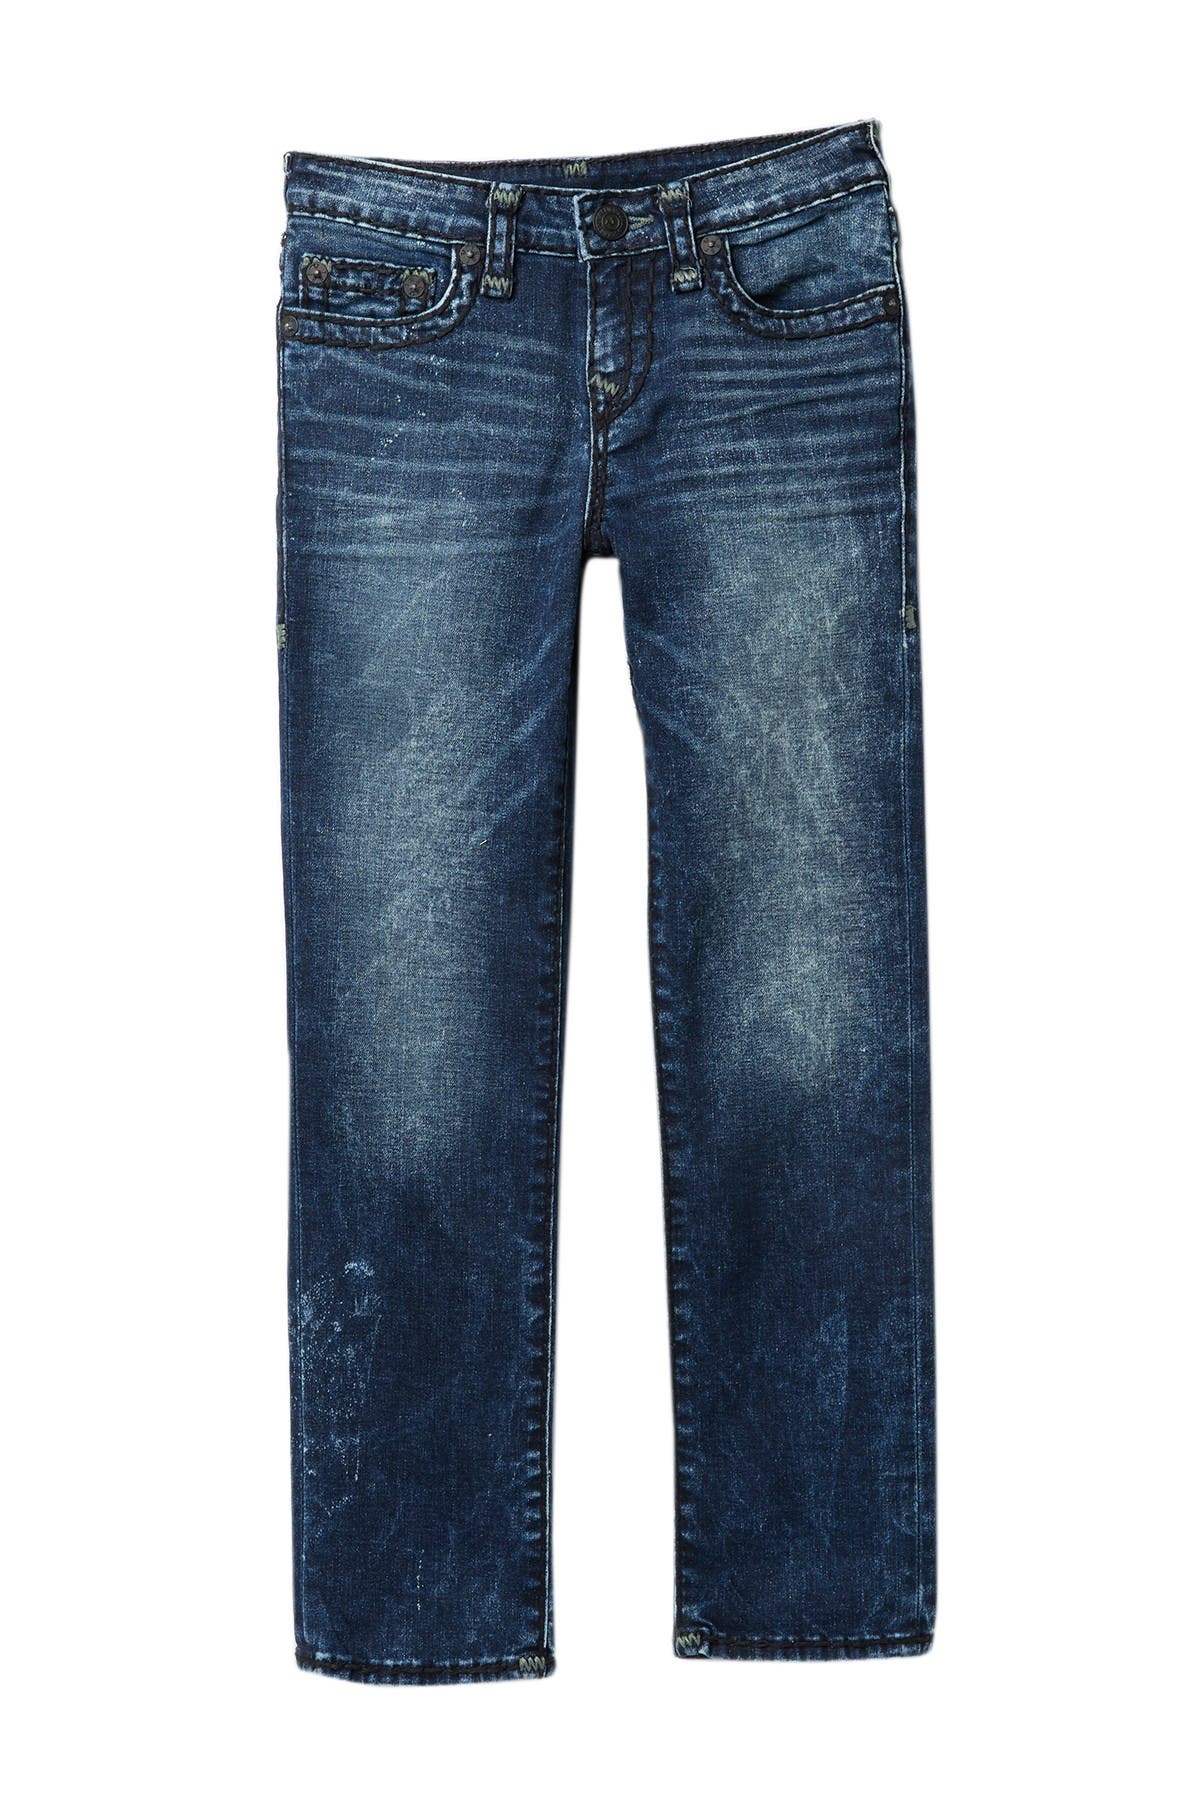 true religion mens jeans nordstrom rack